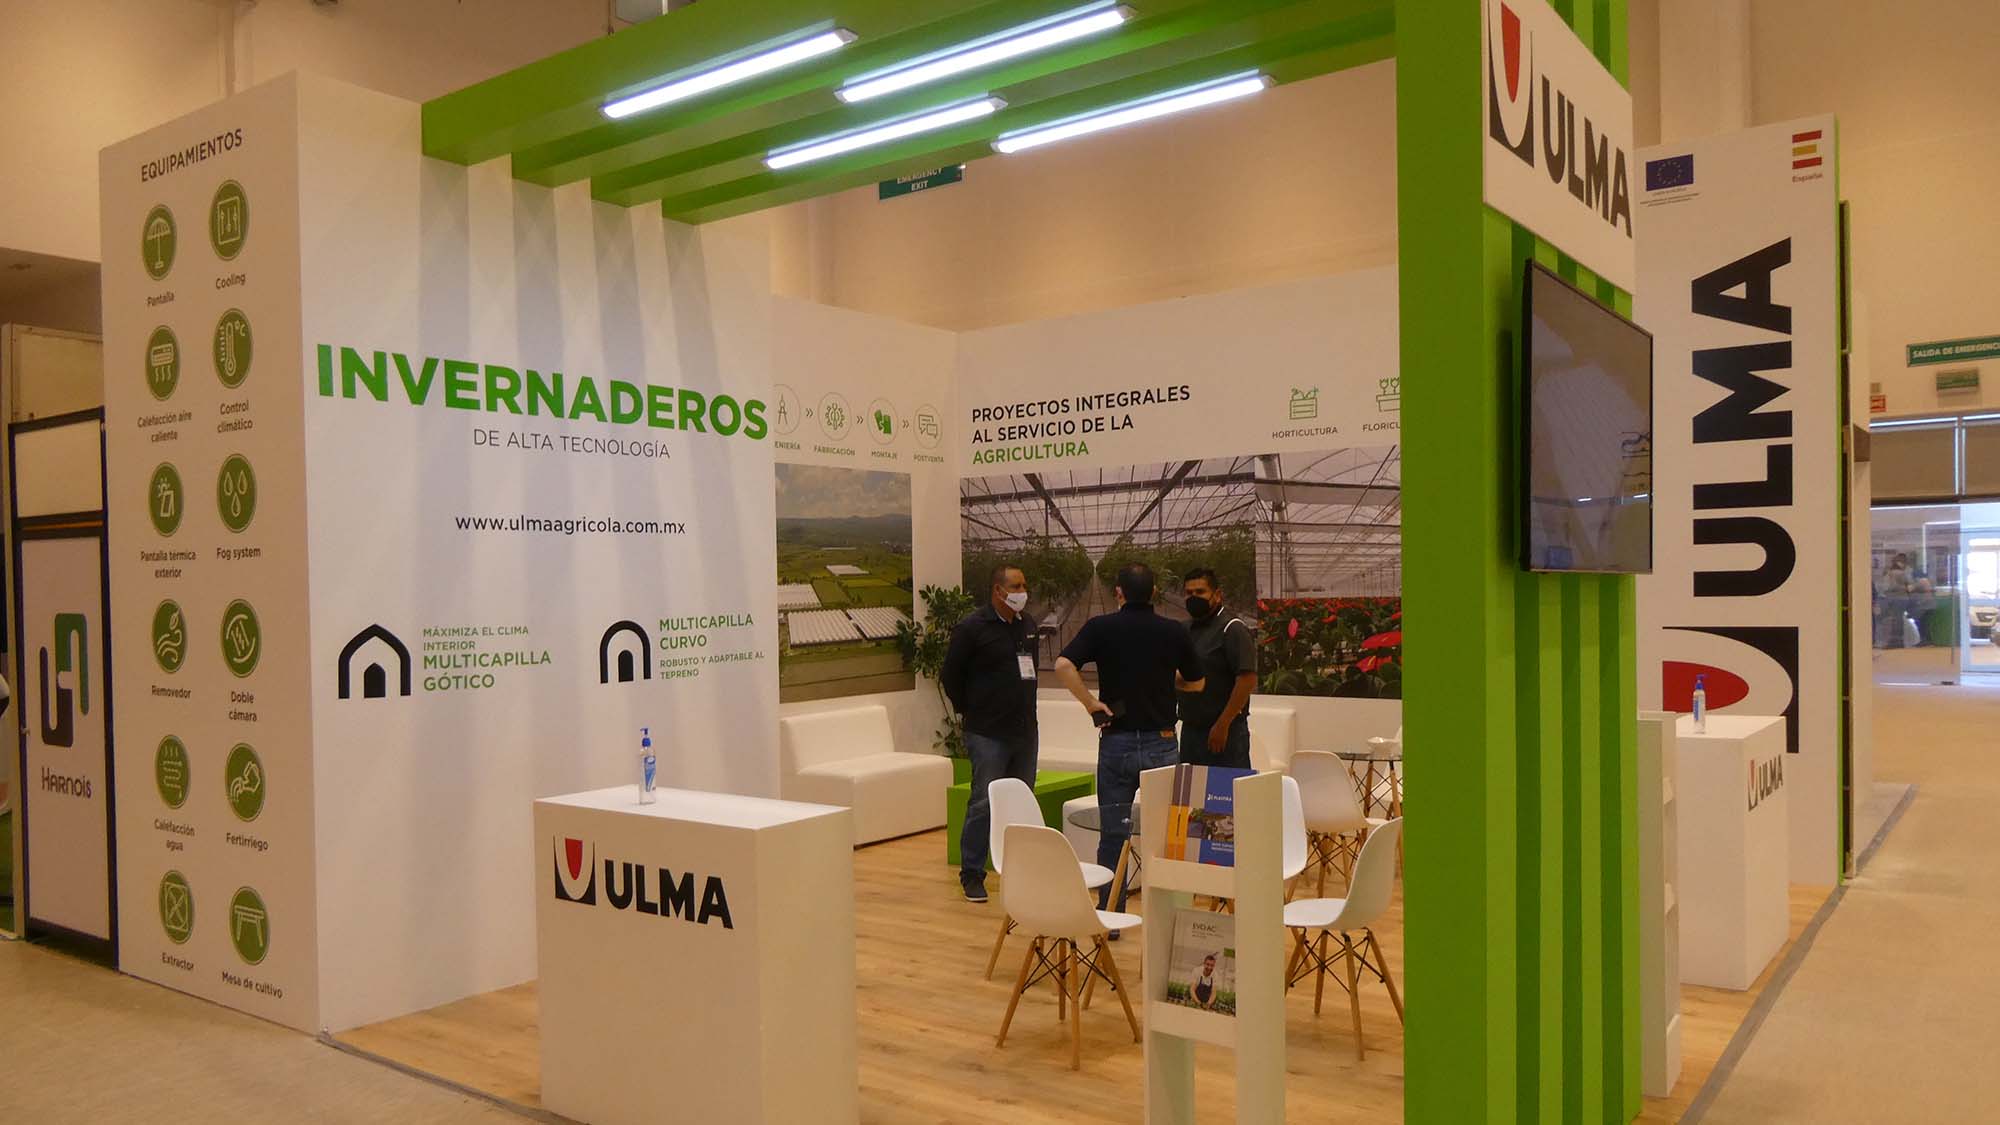 ULMA Agrícola participates in GREENTECH AMERICAS 2021